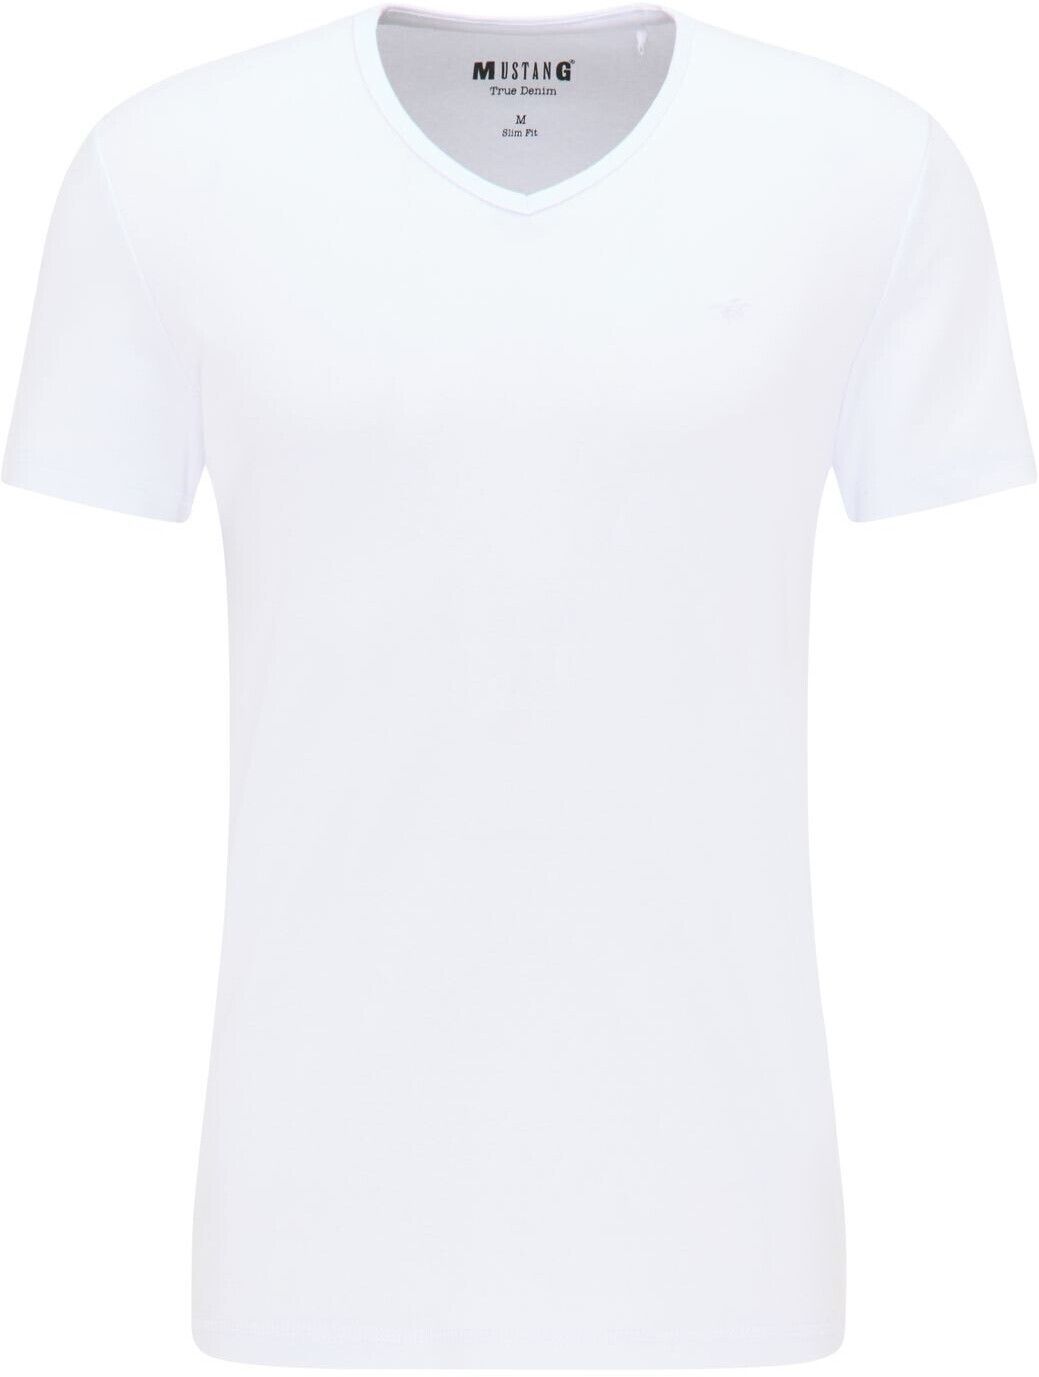 MUSTANG V-Neck T-Shirt bei (1008814) 15,90 ab | Preisvergleich €